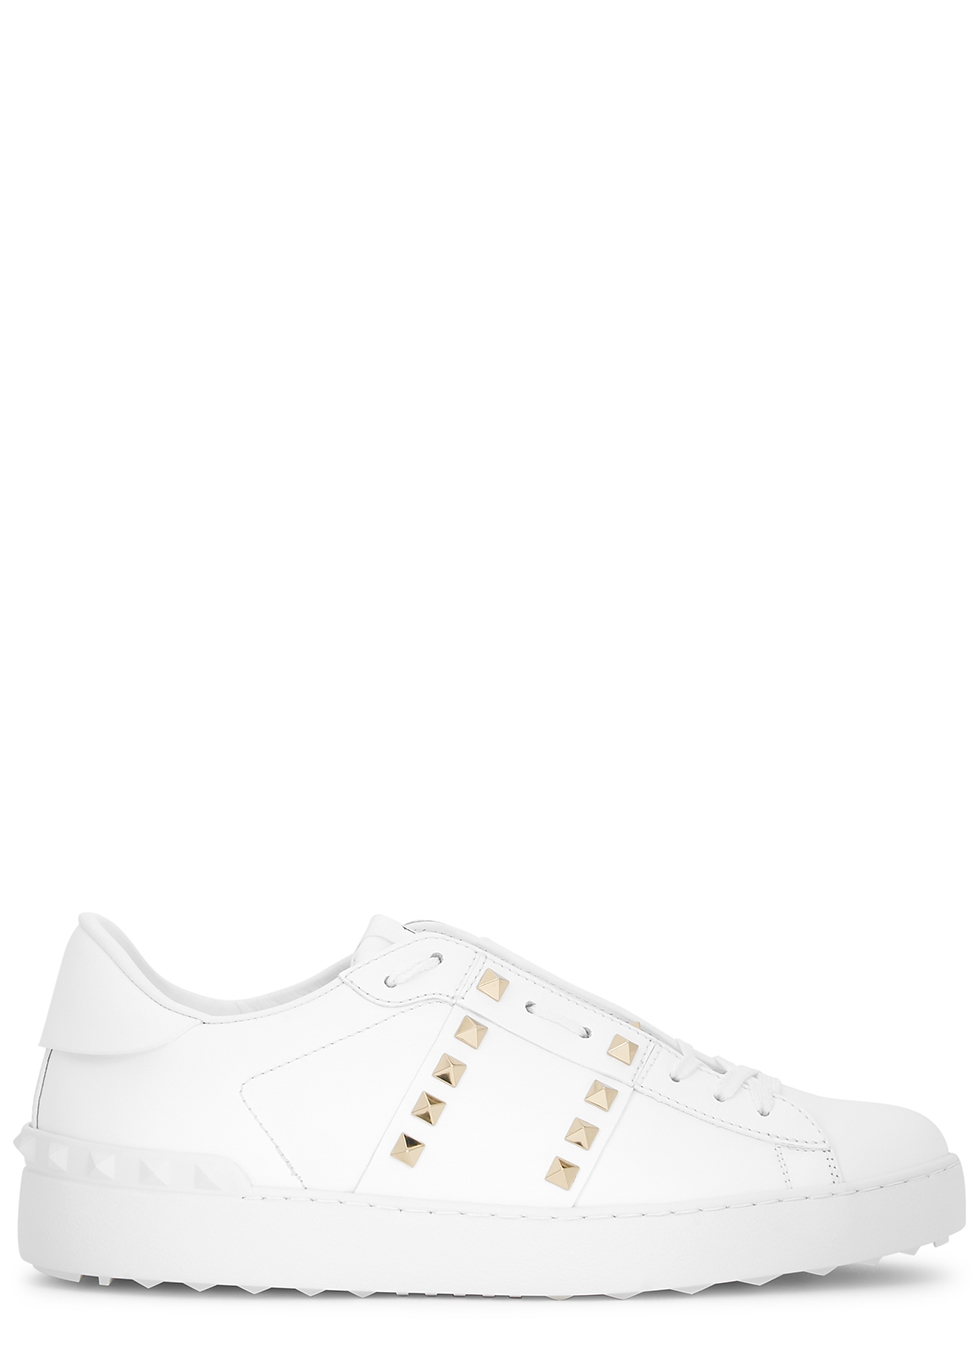 Valentino Garavani Rockstud Untitled white leather sneakers